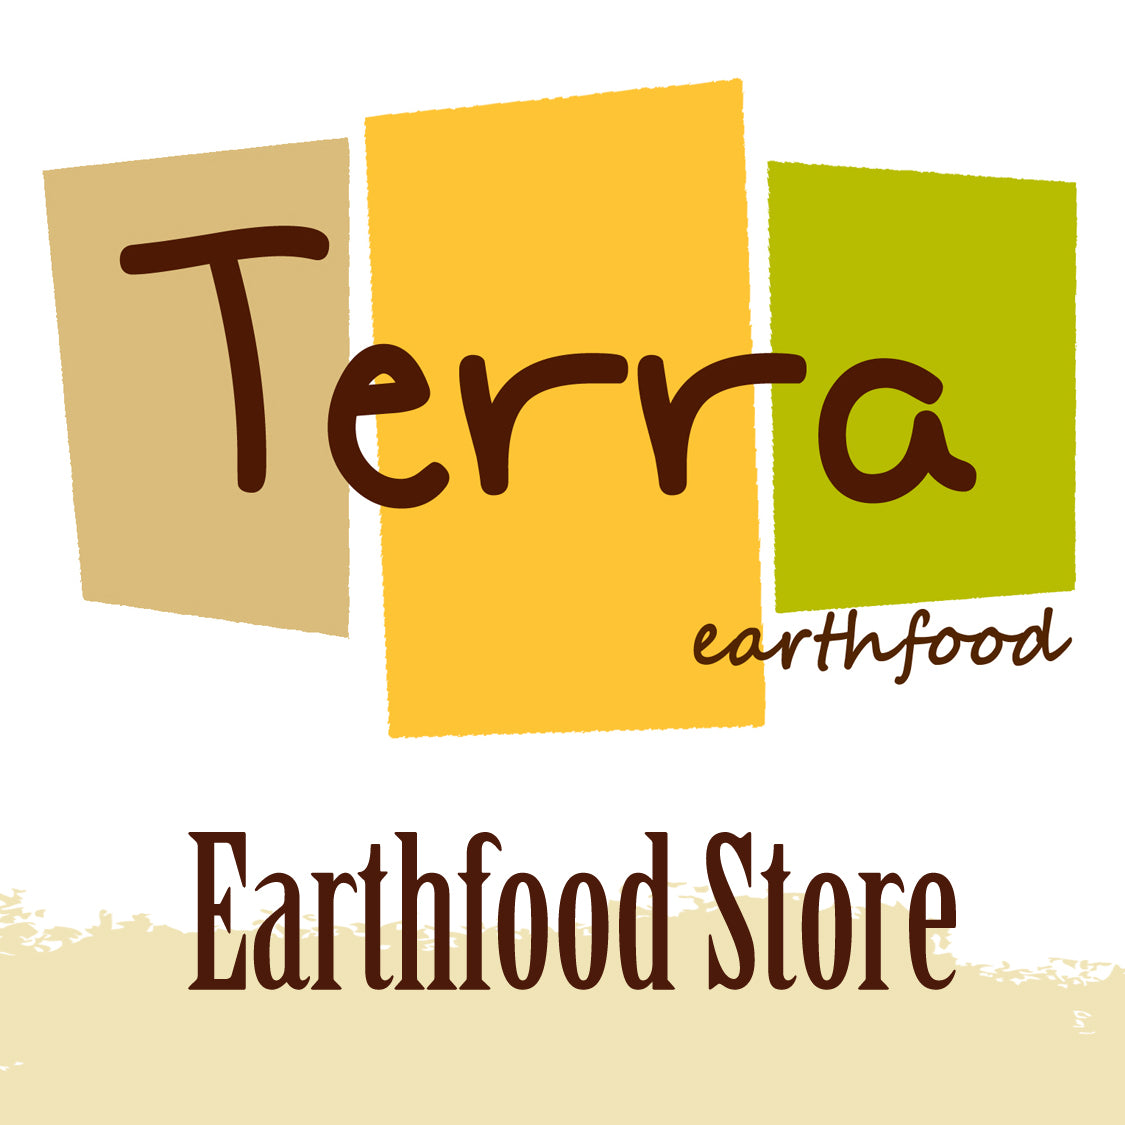 Terra Earthfood